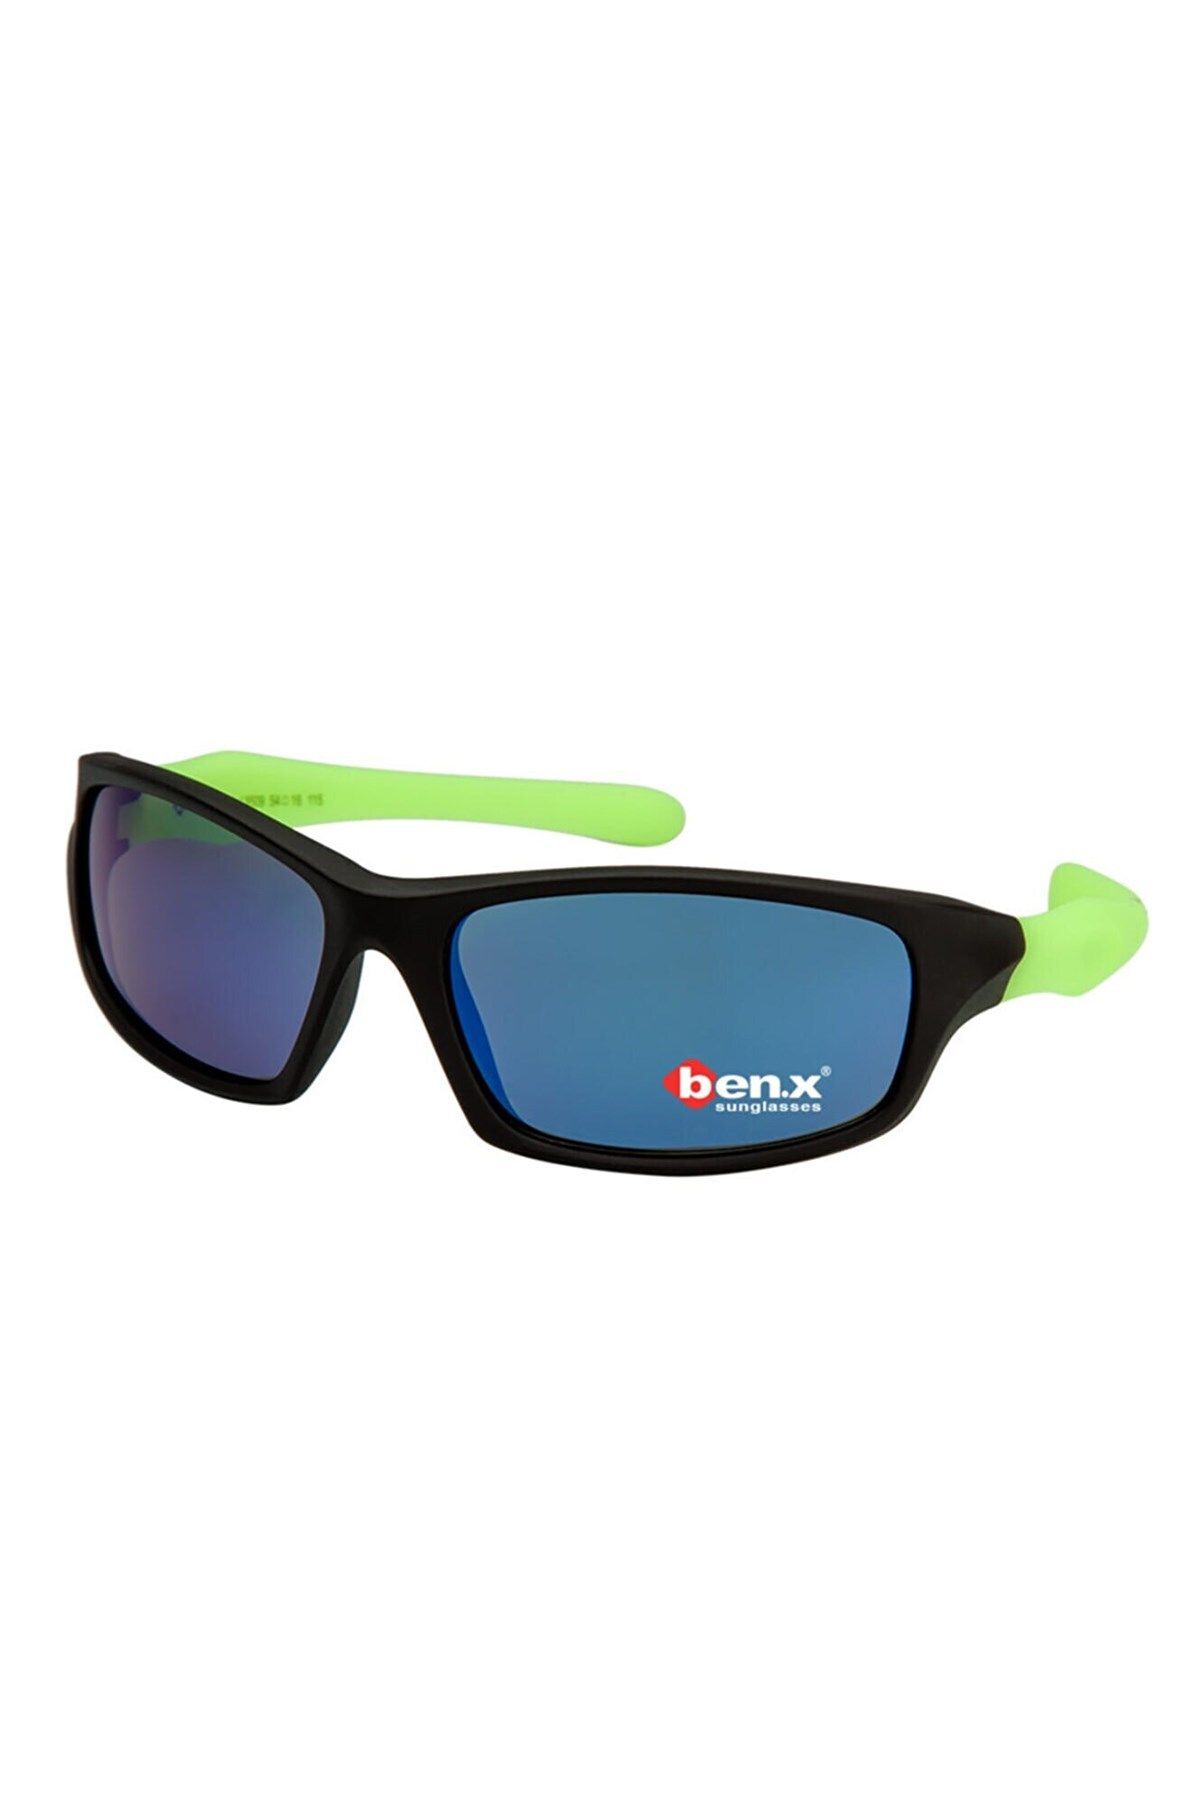 Benx Sunglasses Benx Bxs 9509-m0684 Çocuk Güneş Gözlüğü